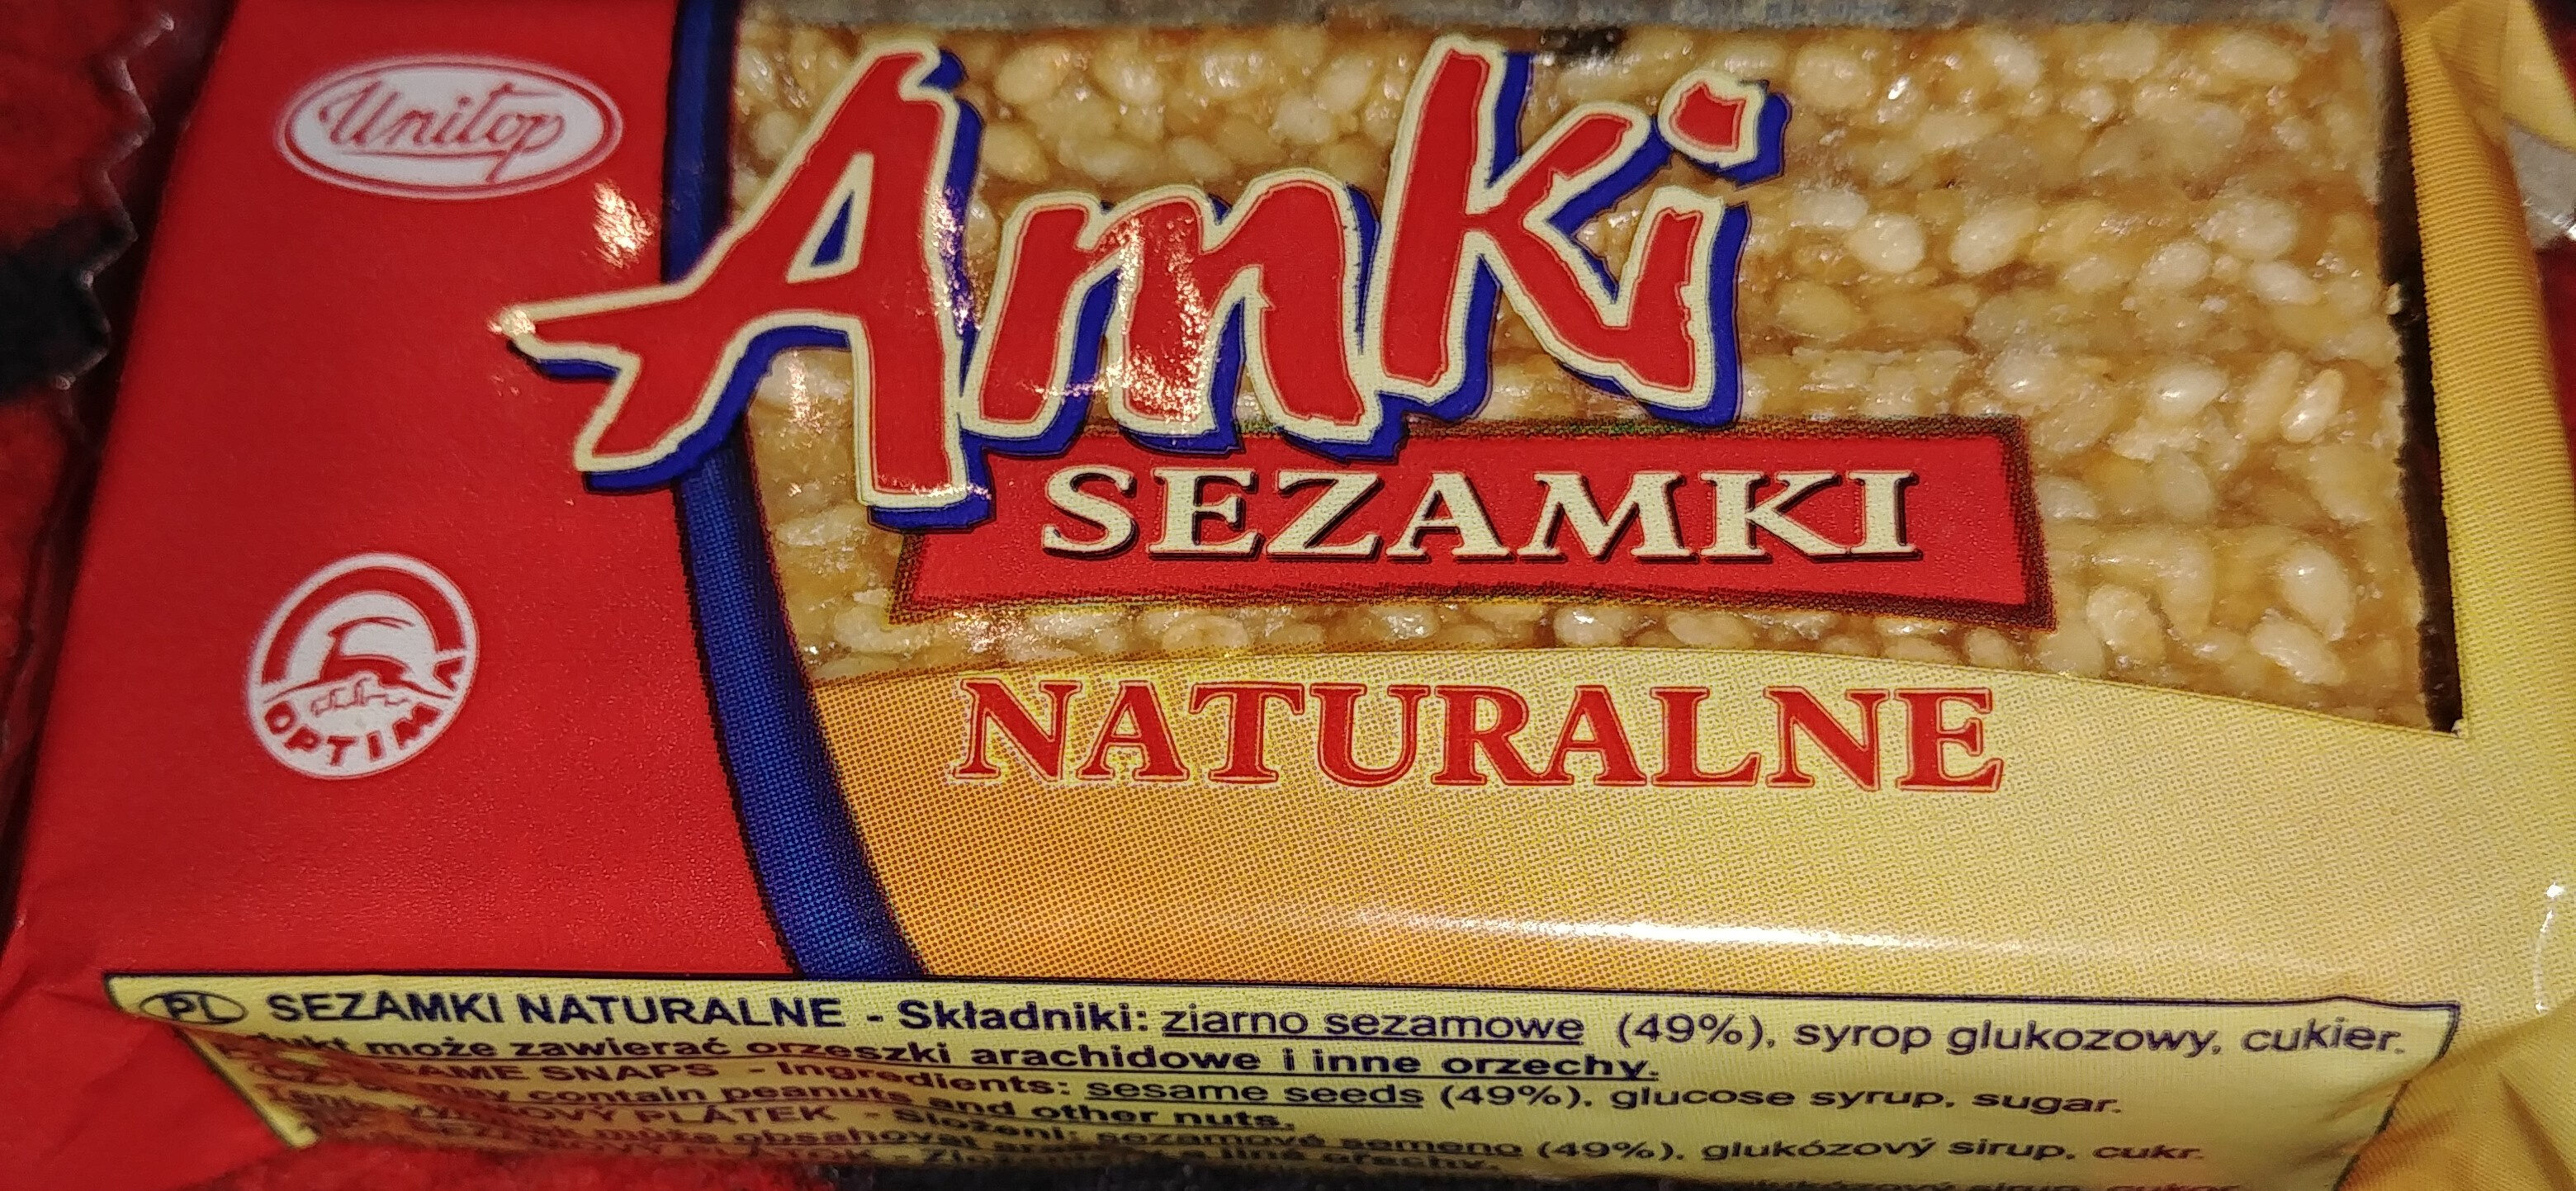 Sezamki naturalne - Product - pl